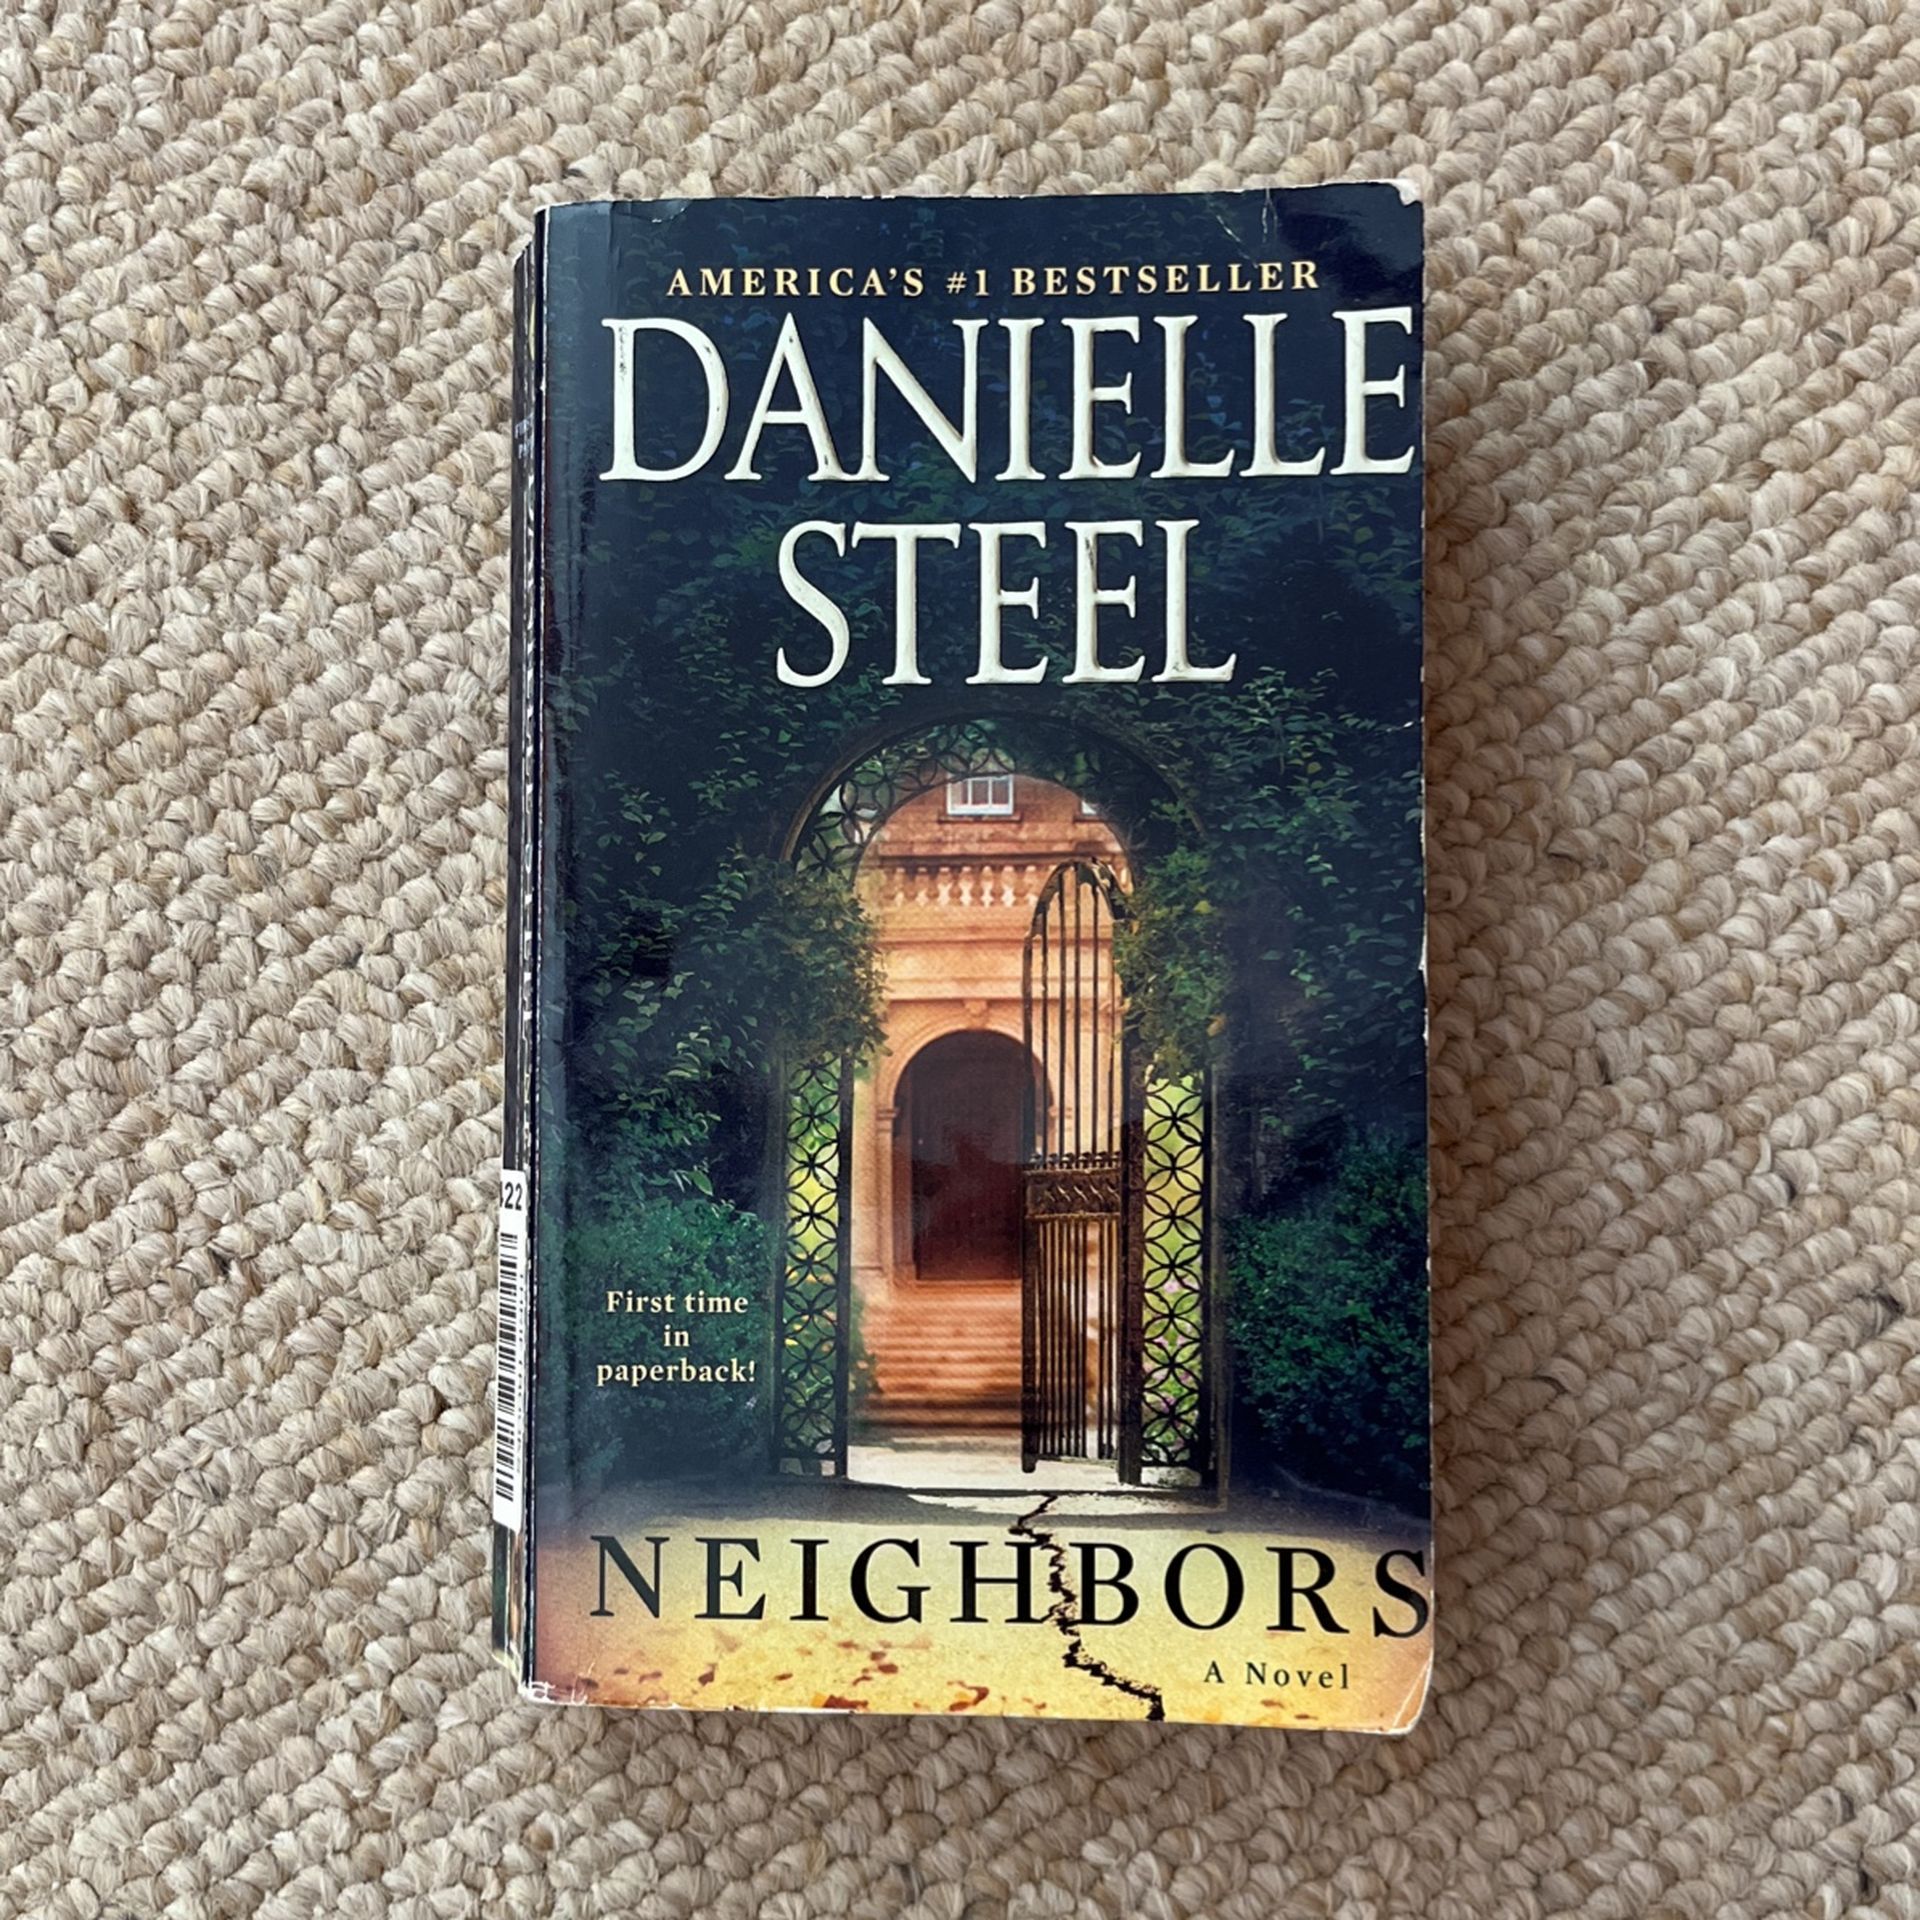 Neighbors -by Danielle Steel